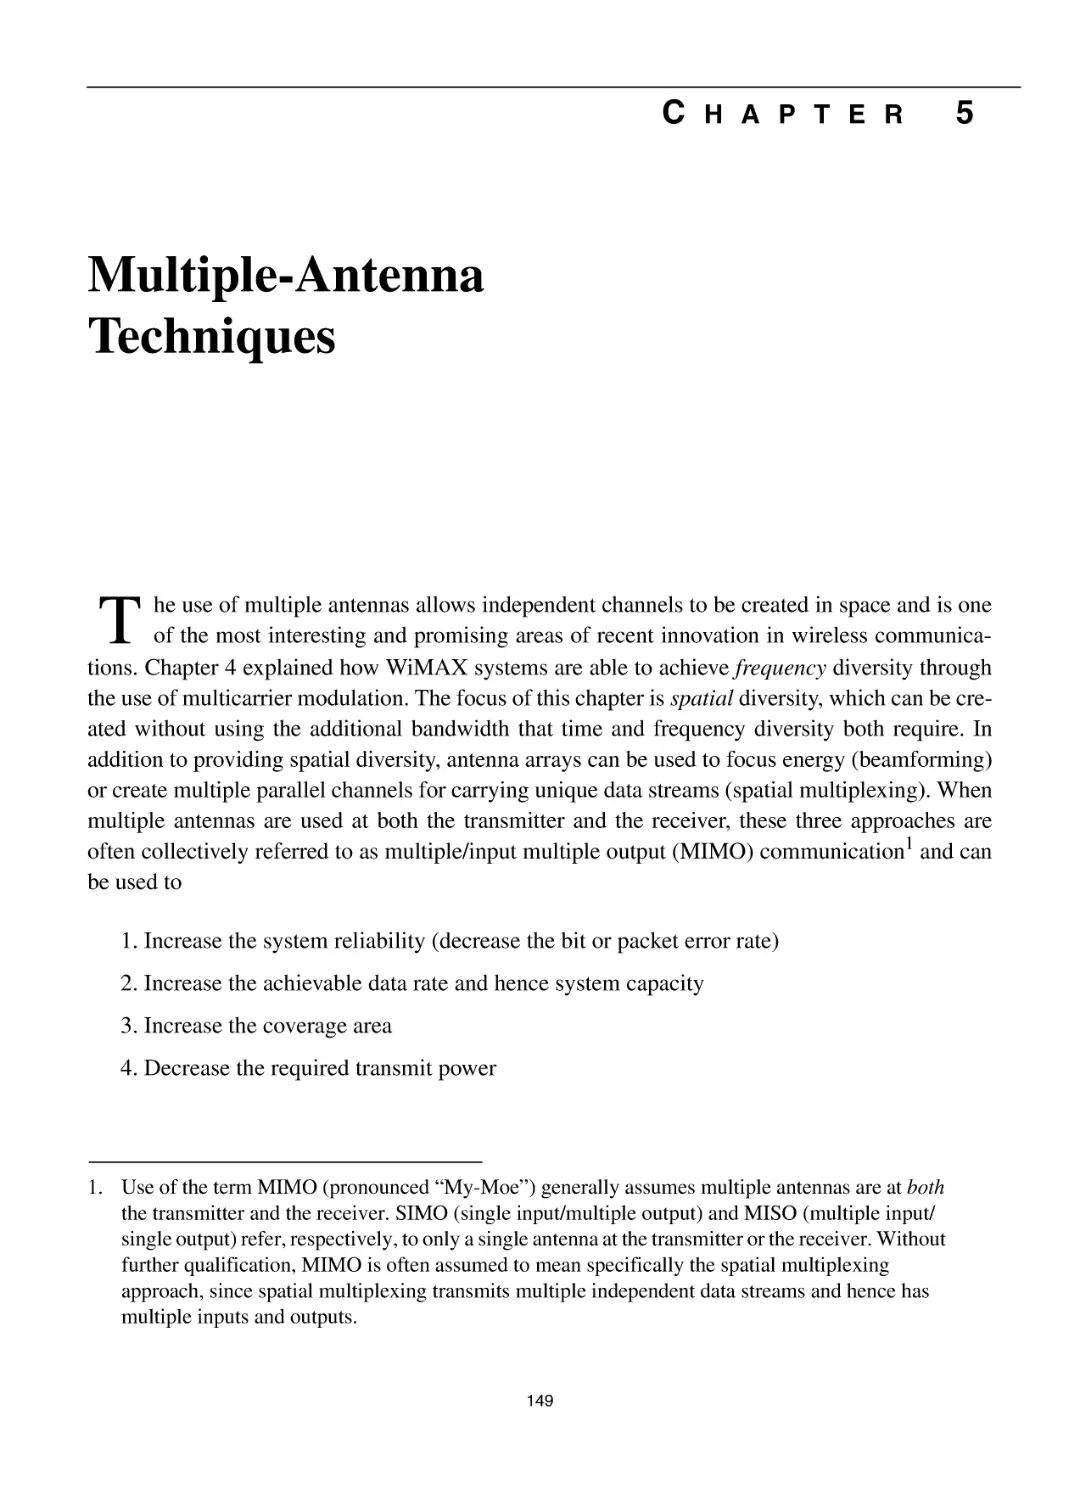 5 Multiple-Antenna Techniques